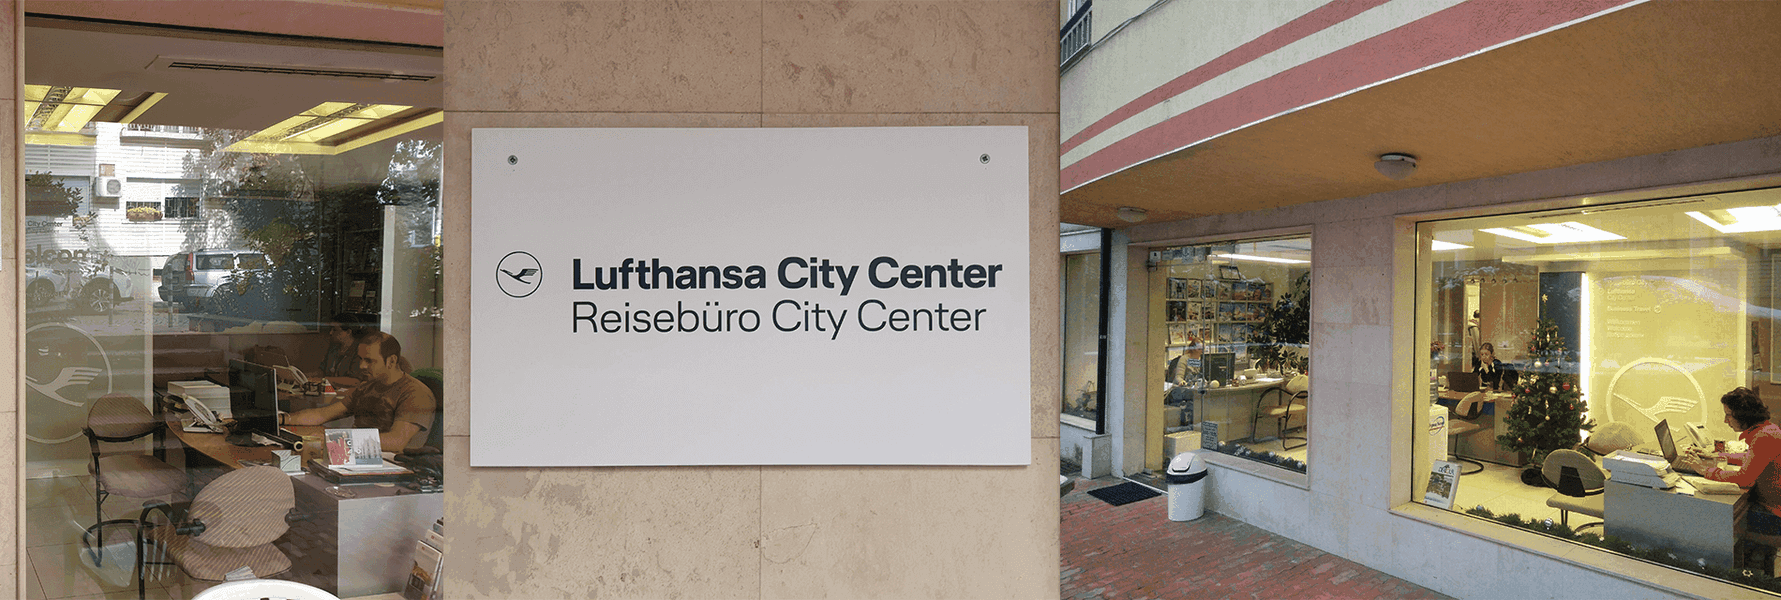 Reisebüro City Center